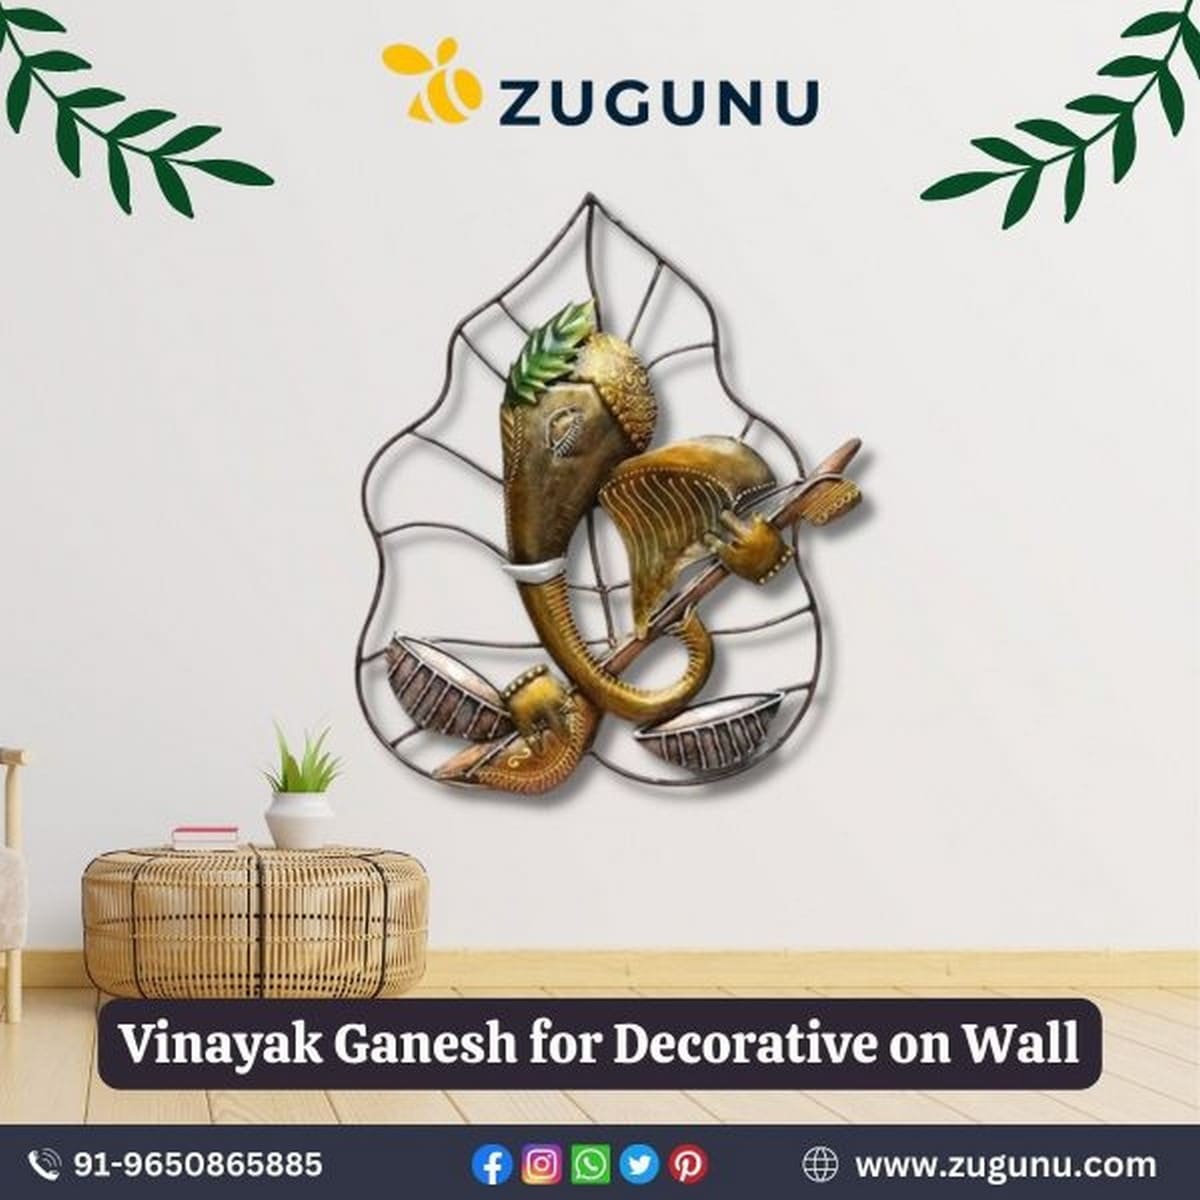 Buy Wall Decor Online With ZuGuNu Vinayak Ganesha